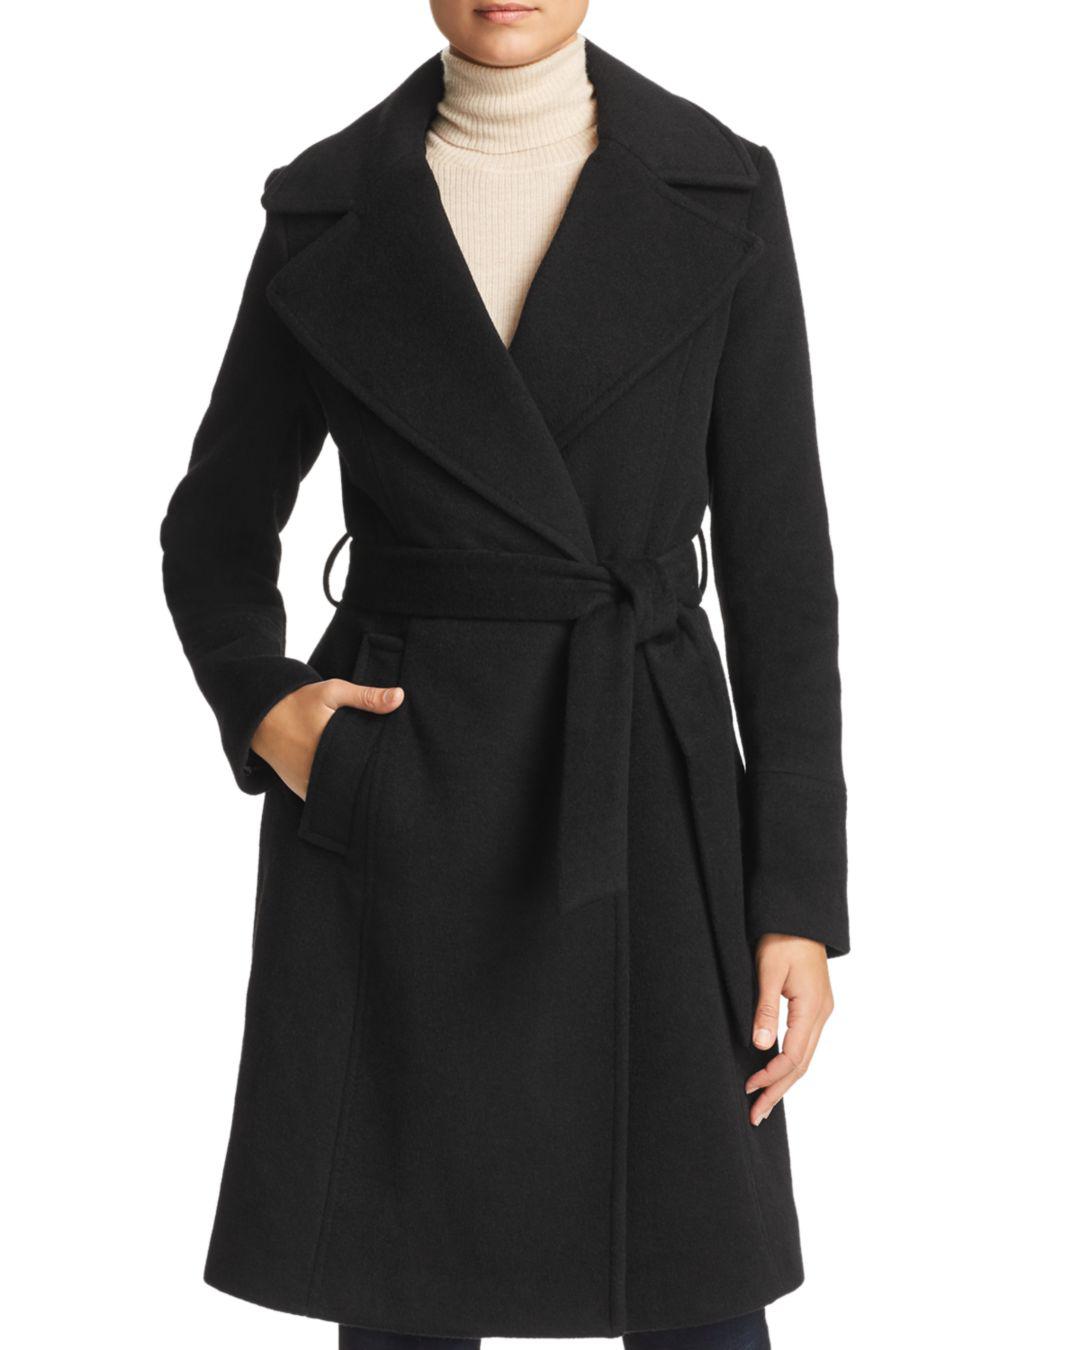 Calvin Klein Notched Collar Wrap Coat in Black - Lyst